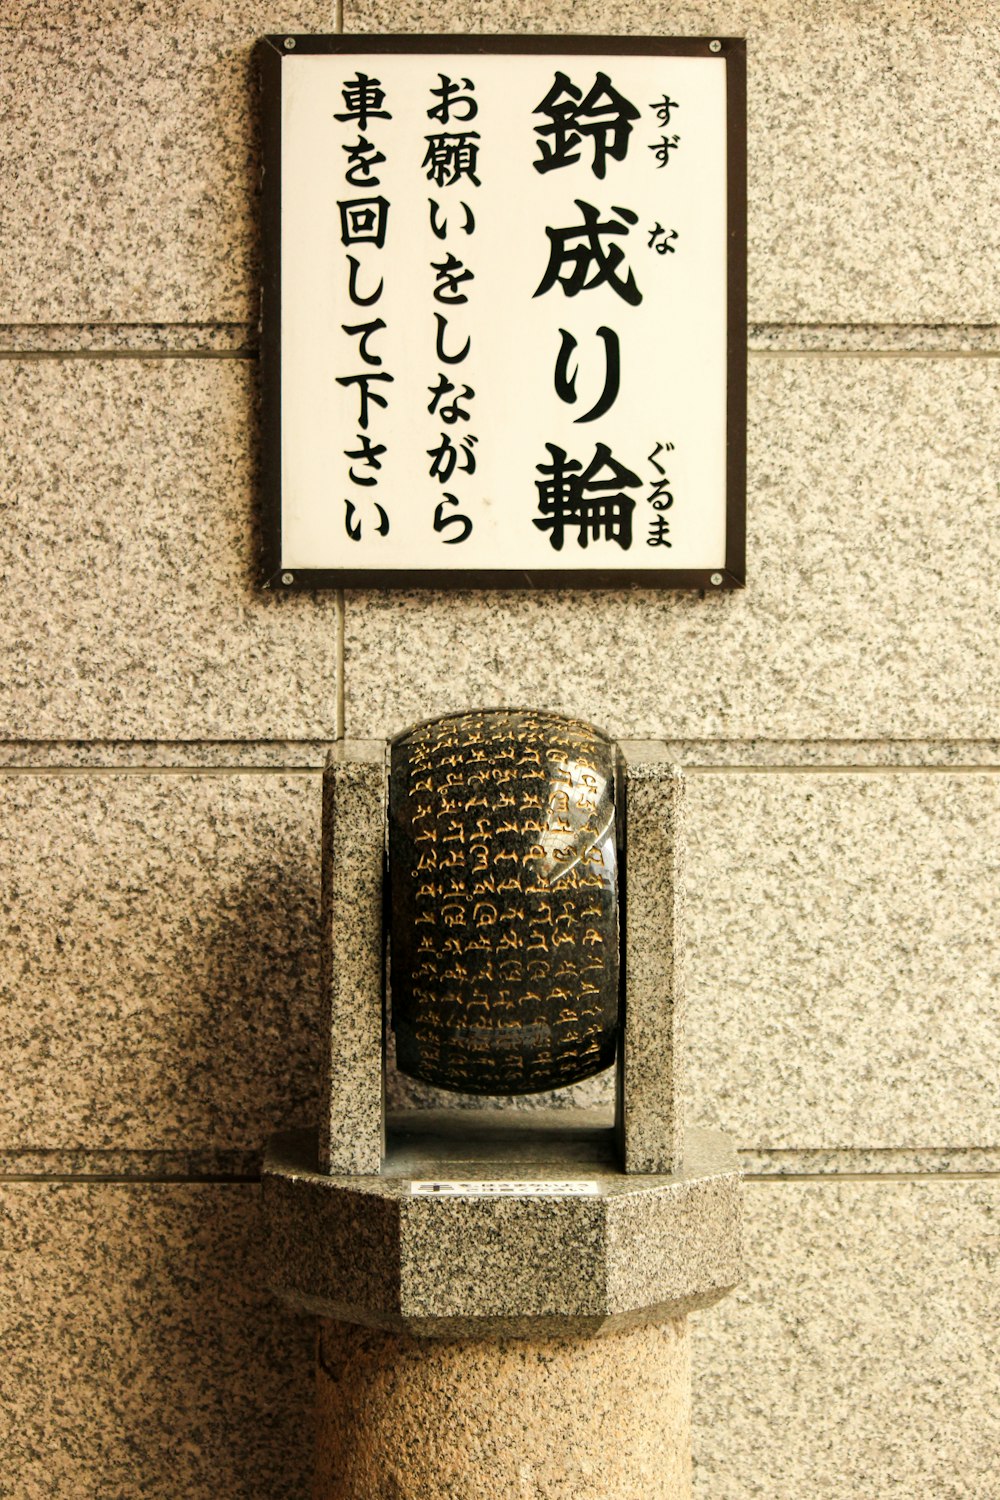 kanji text on white wall